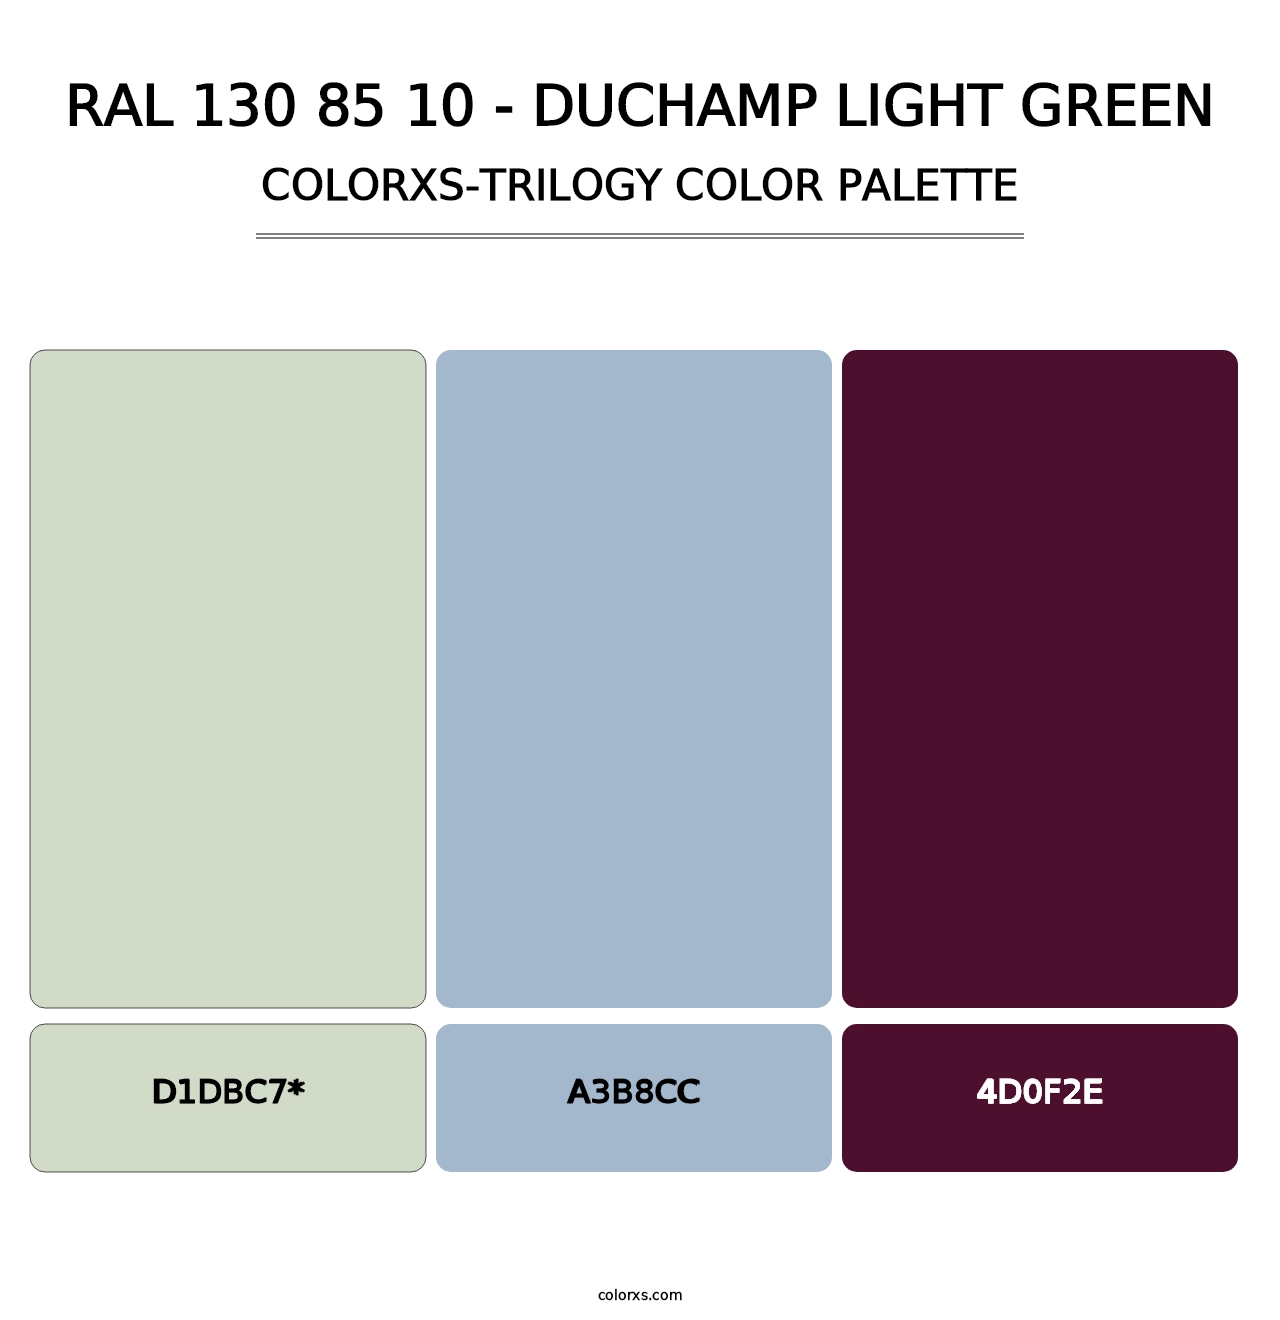 RAL 130 85 10 - Duchamp Light Green - Colorxs Trilogy Palette